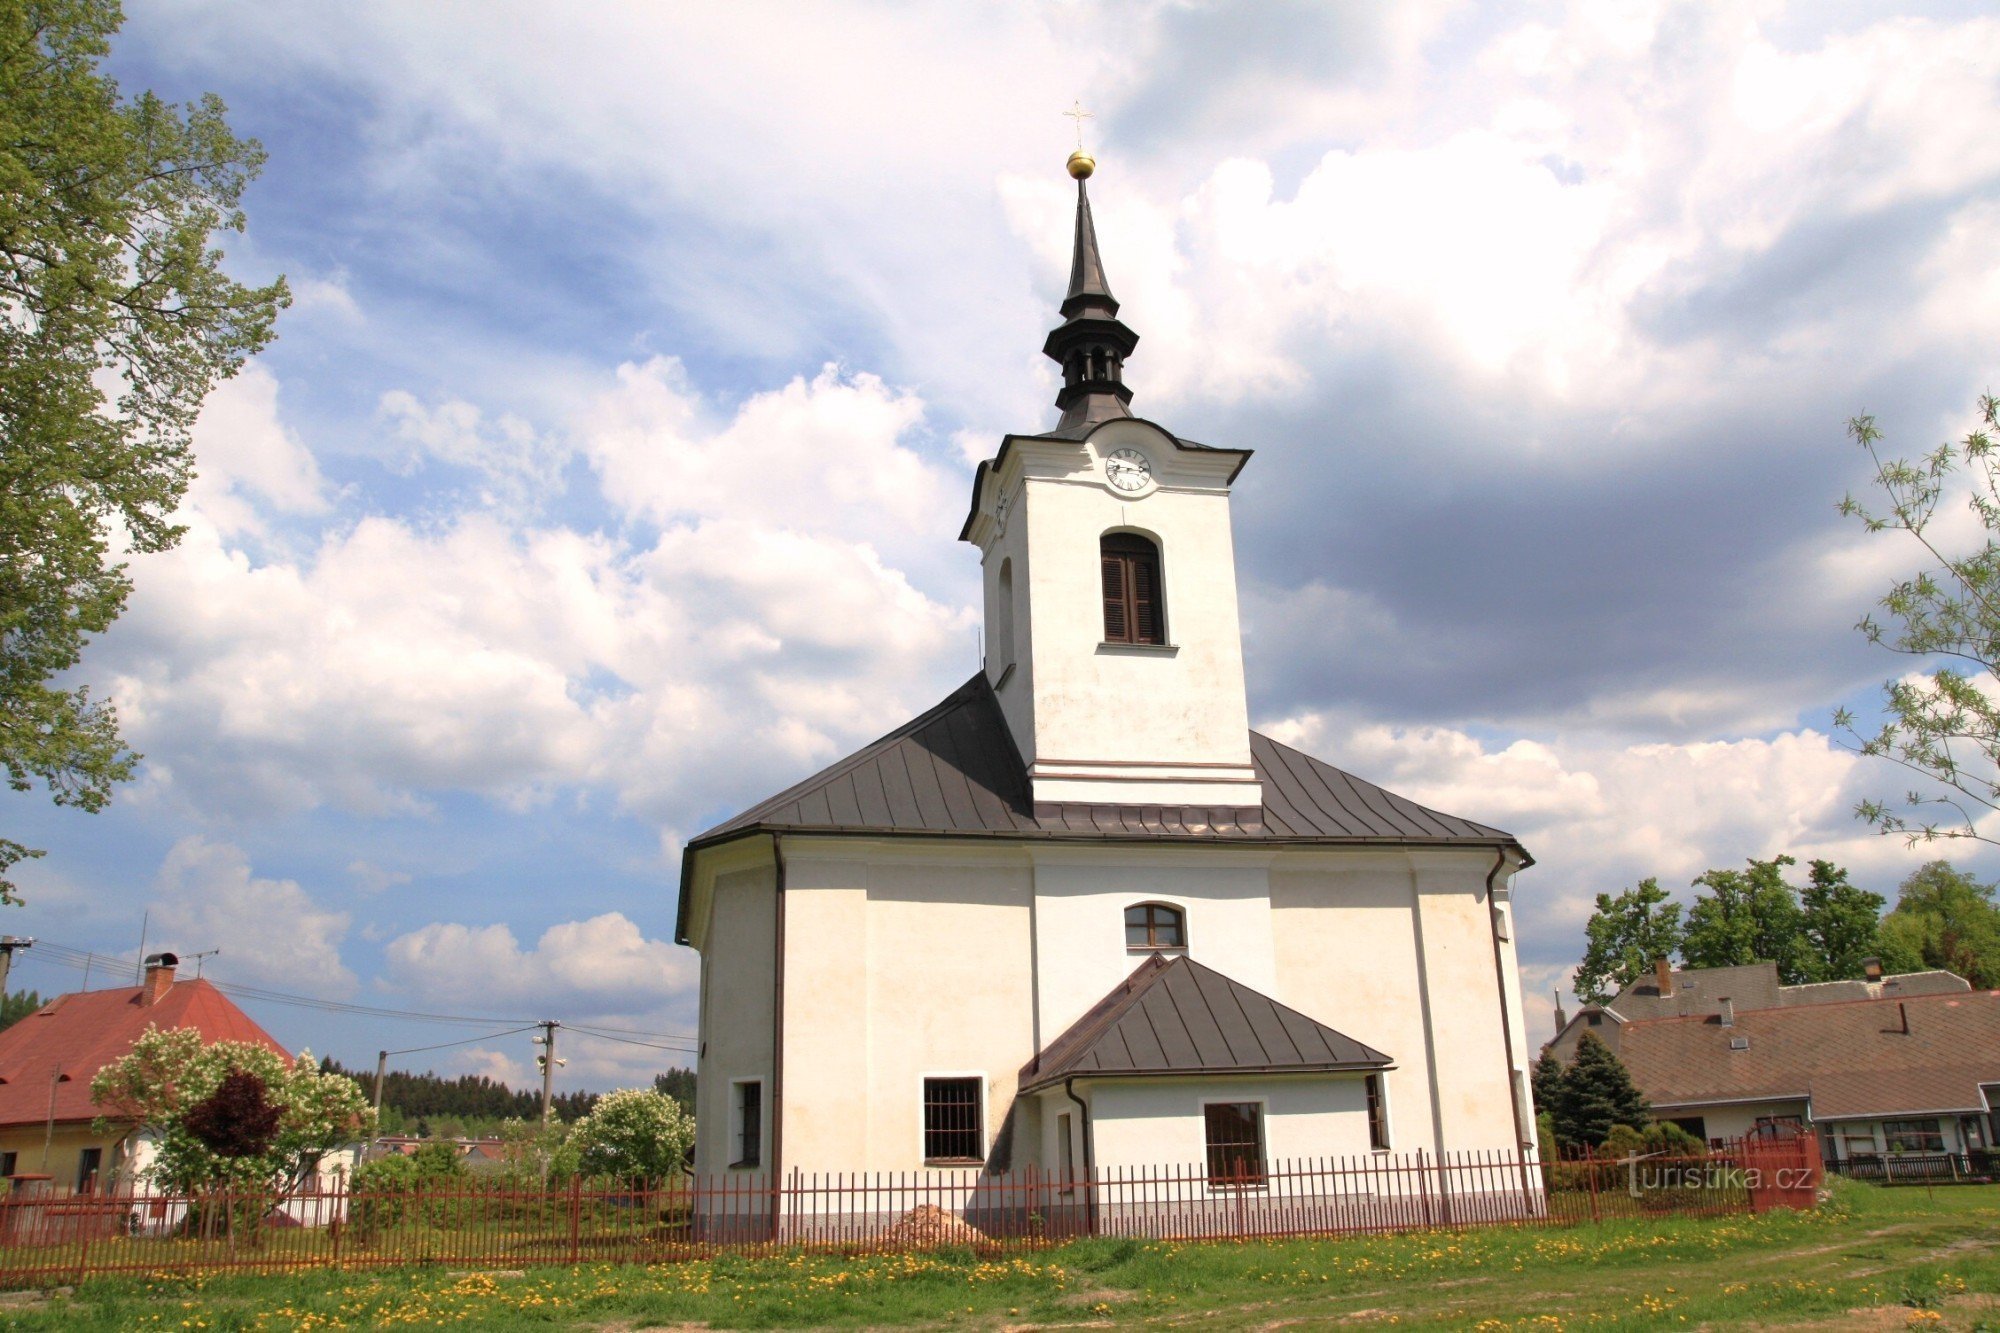 Vojnův Městec - church